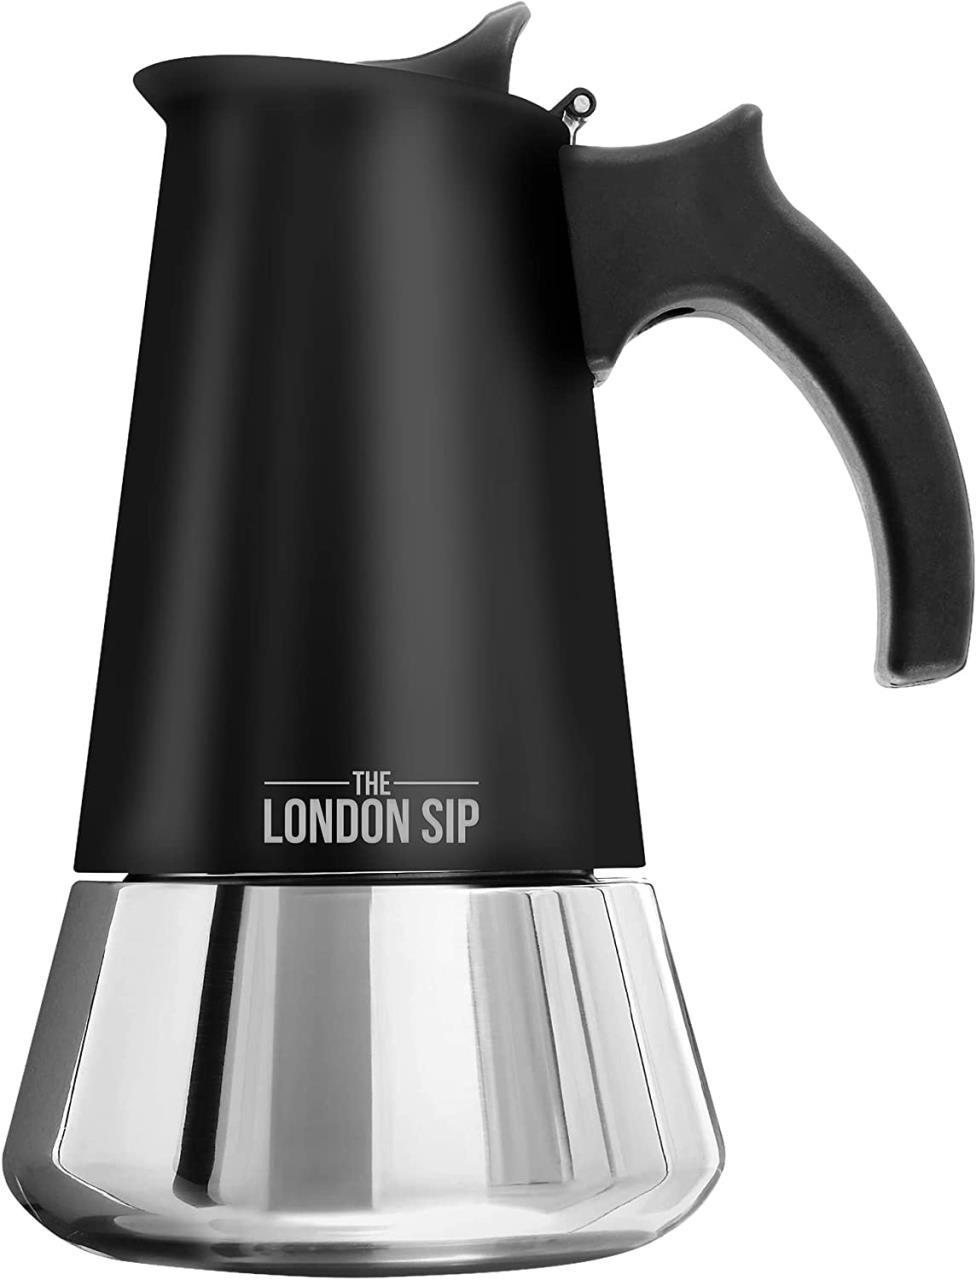 https://cdn11.bigcommerce.com/s-gemsyzzxez/images/stencil/1280x1280/products/11411/65958/London-Sip-Stainless-Steel-Stovetop-Espresso-Coffee-Maker-10-Cup-Black-EM10B_image1__44942.1676919950.jpg?c=1